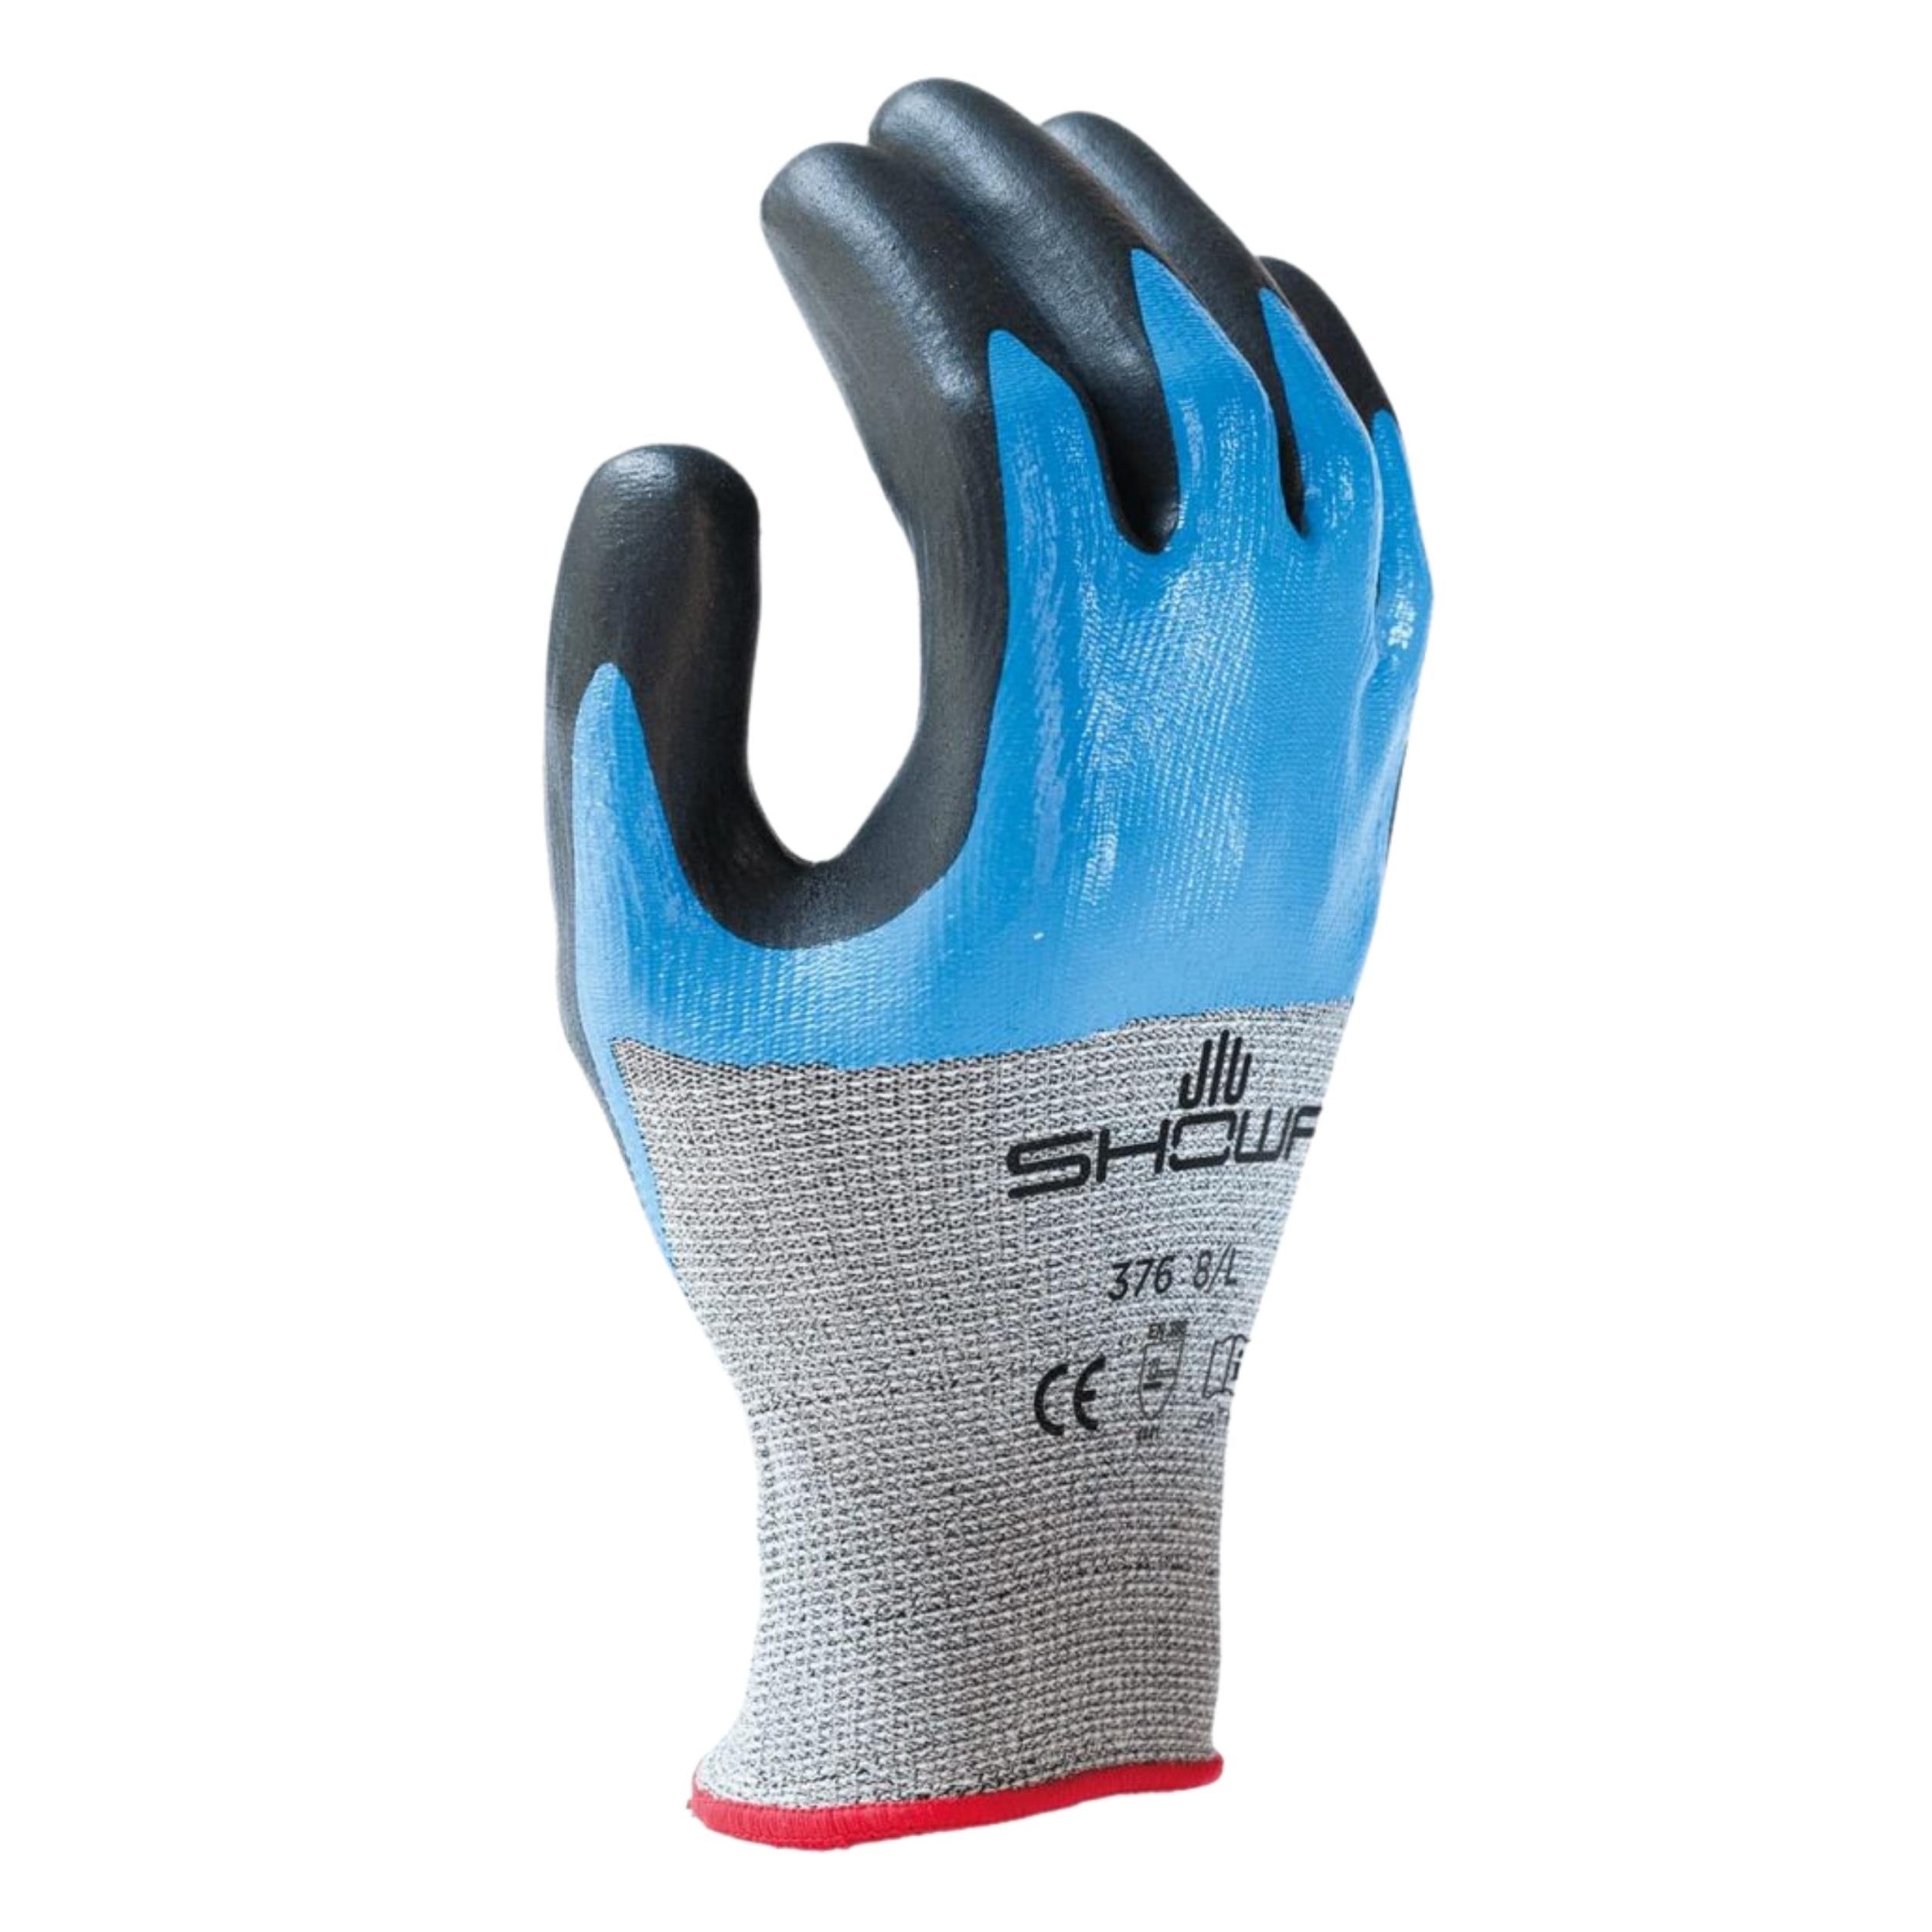 SHOWA 376 Liquid- resistant: General-purpose Gloves 2 Pack